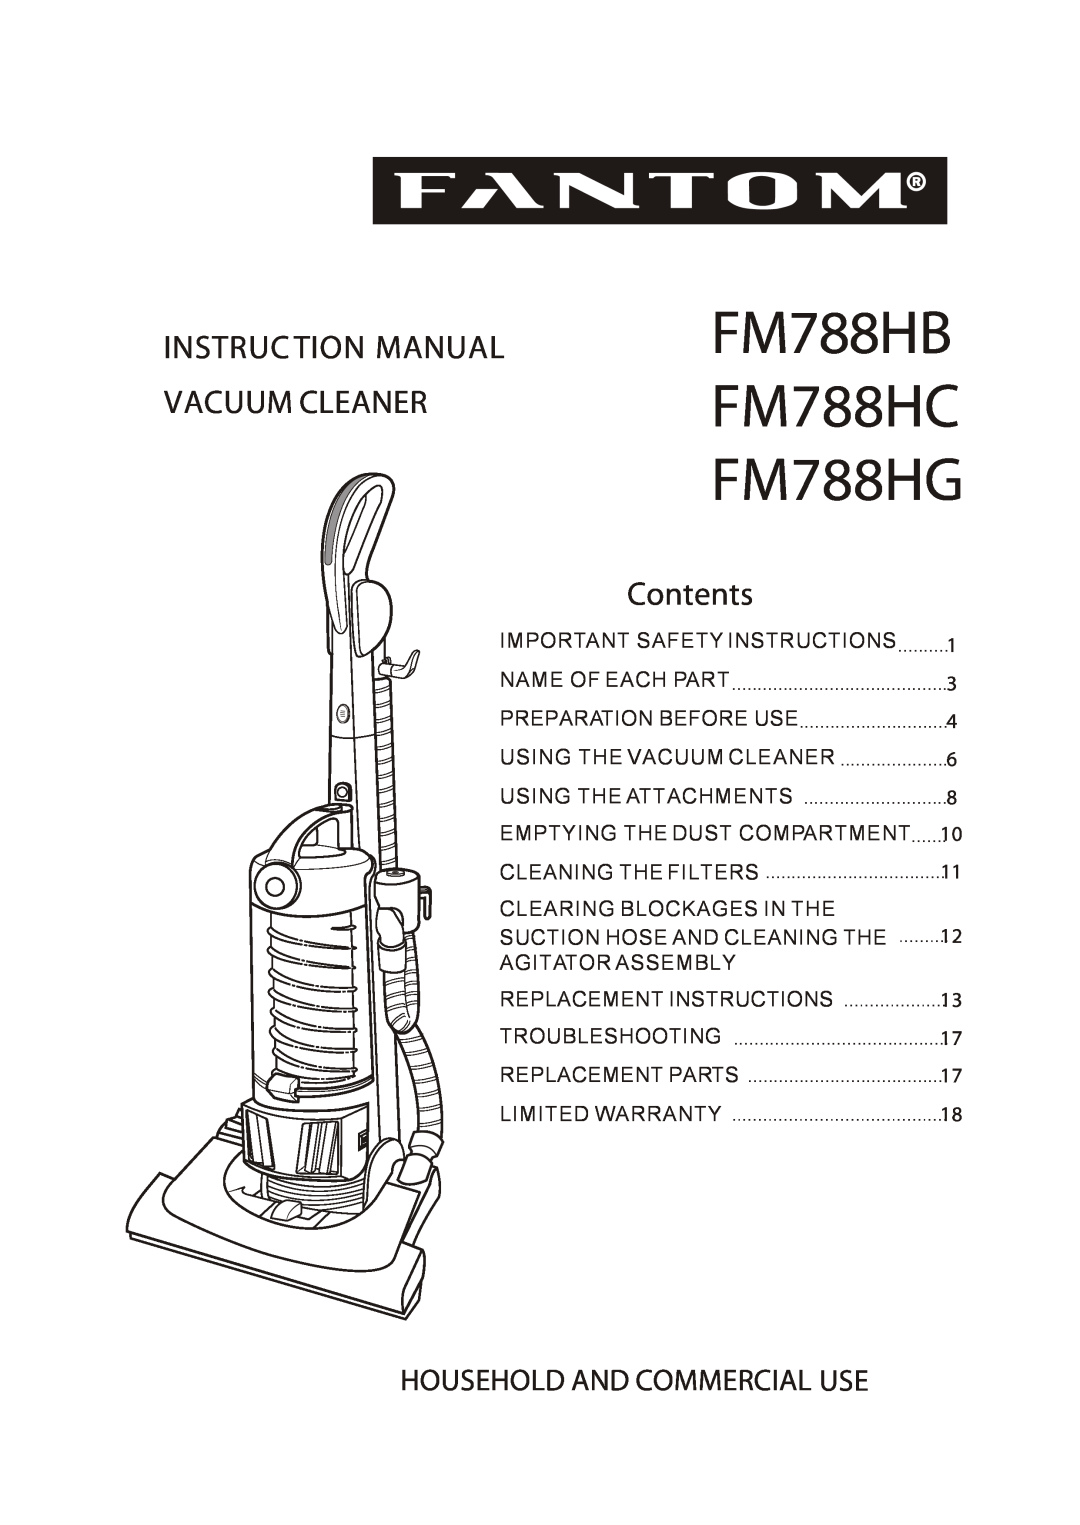 Fantom Vacuum instruction manual FM788HB FM788HC FM788HG, Contents, Household And Commercial Use 